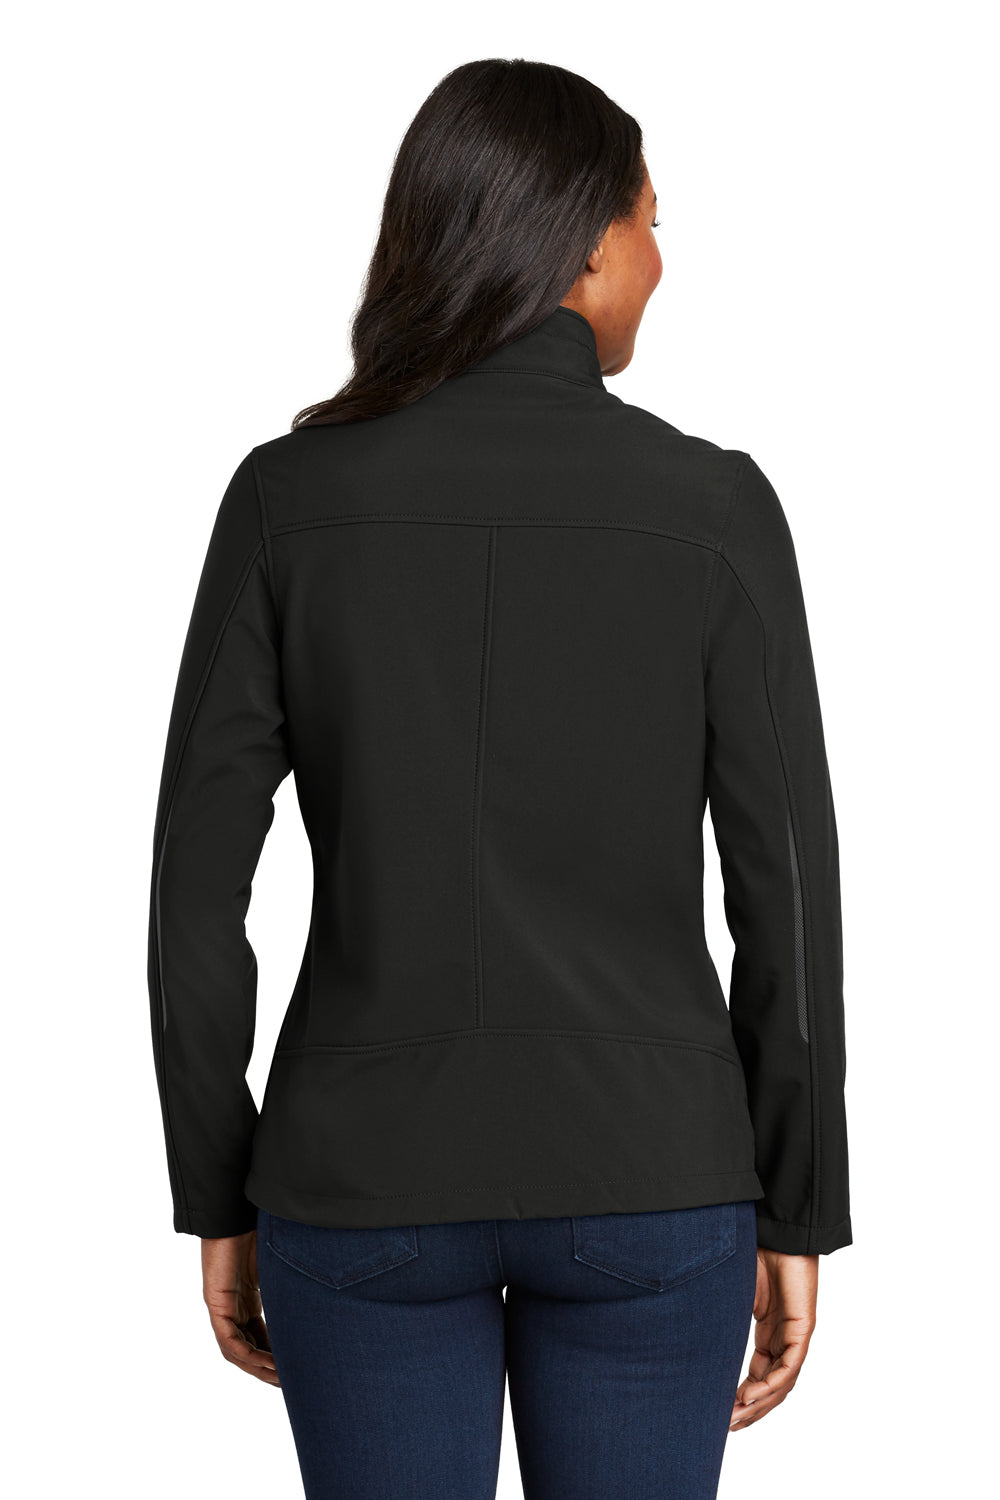 Port Authority L324 Womens Welded Wind & Water Resistant Full Zip Jacket Black Back